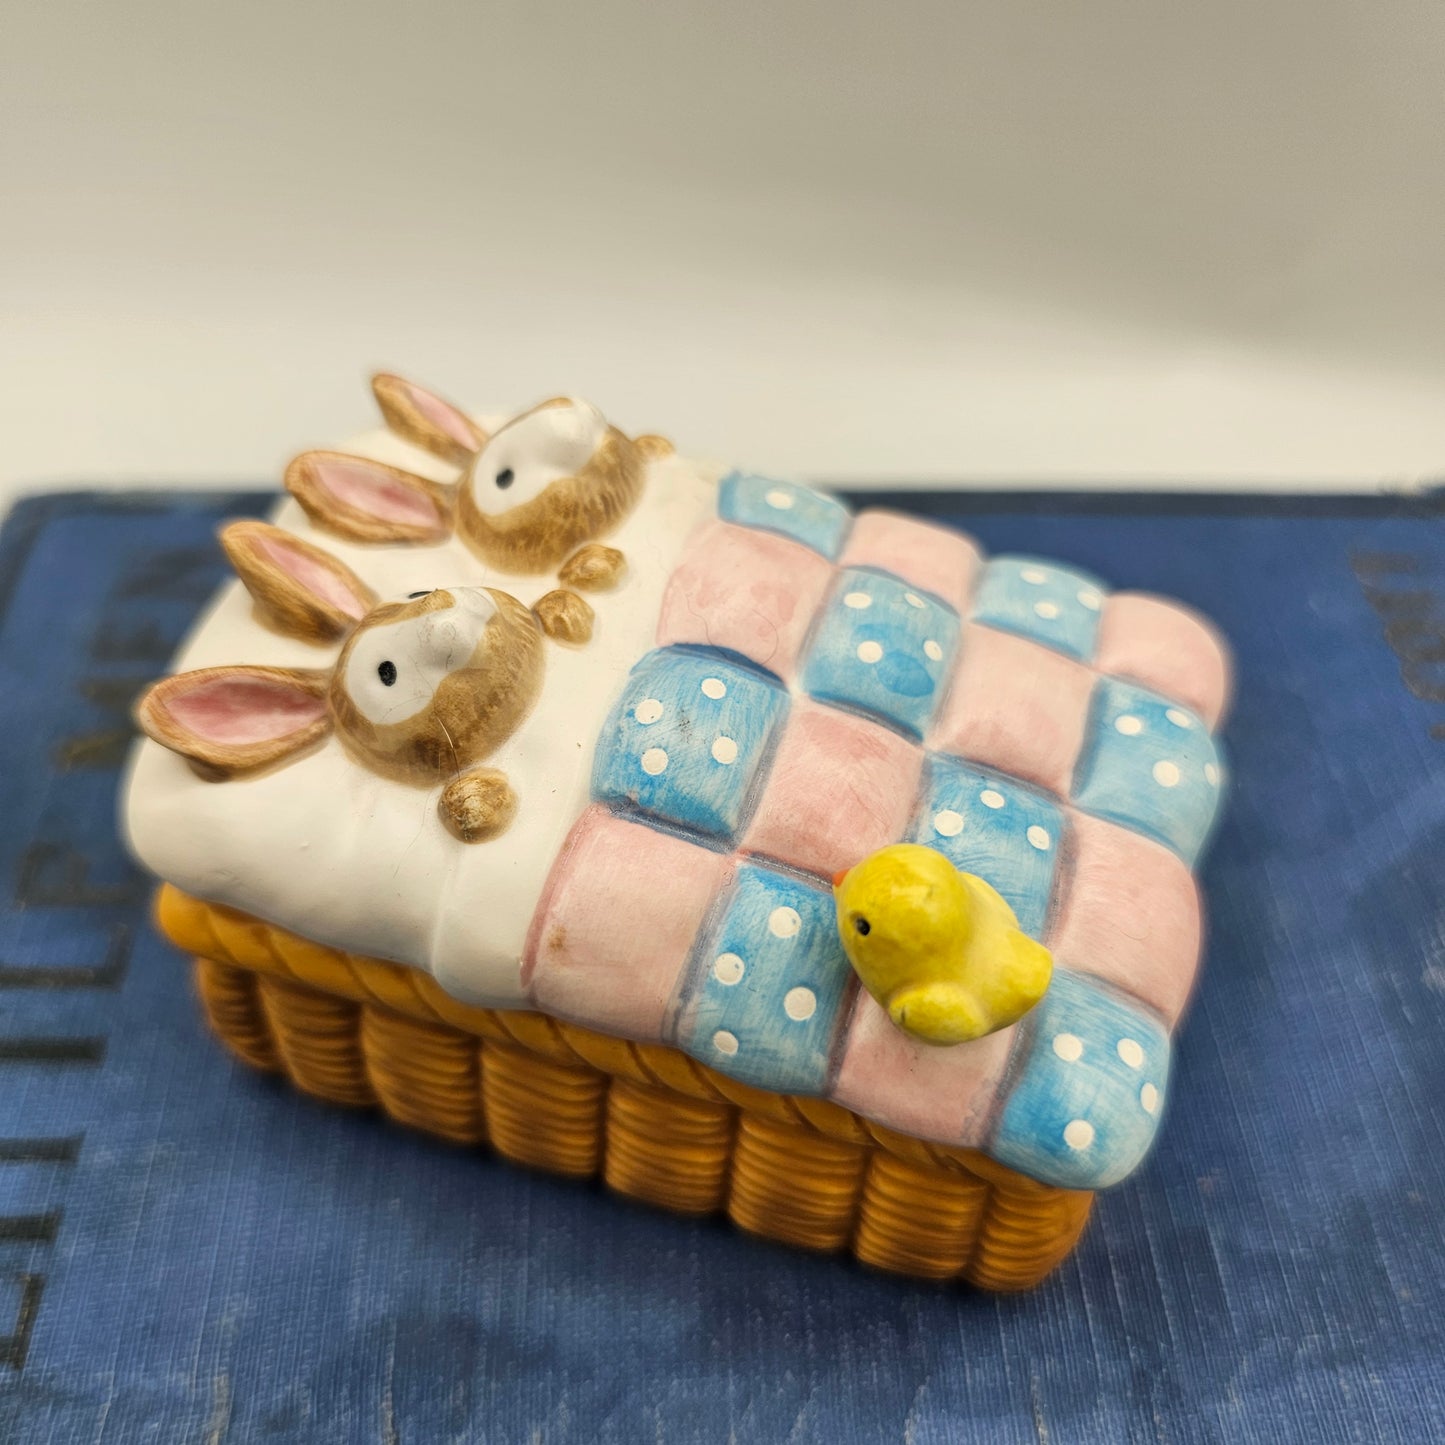 Bunnies in Bed Ceramic Lidded Trinket Box